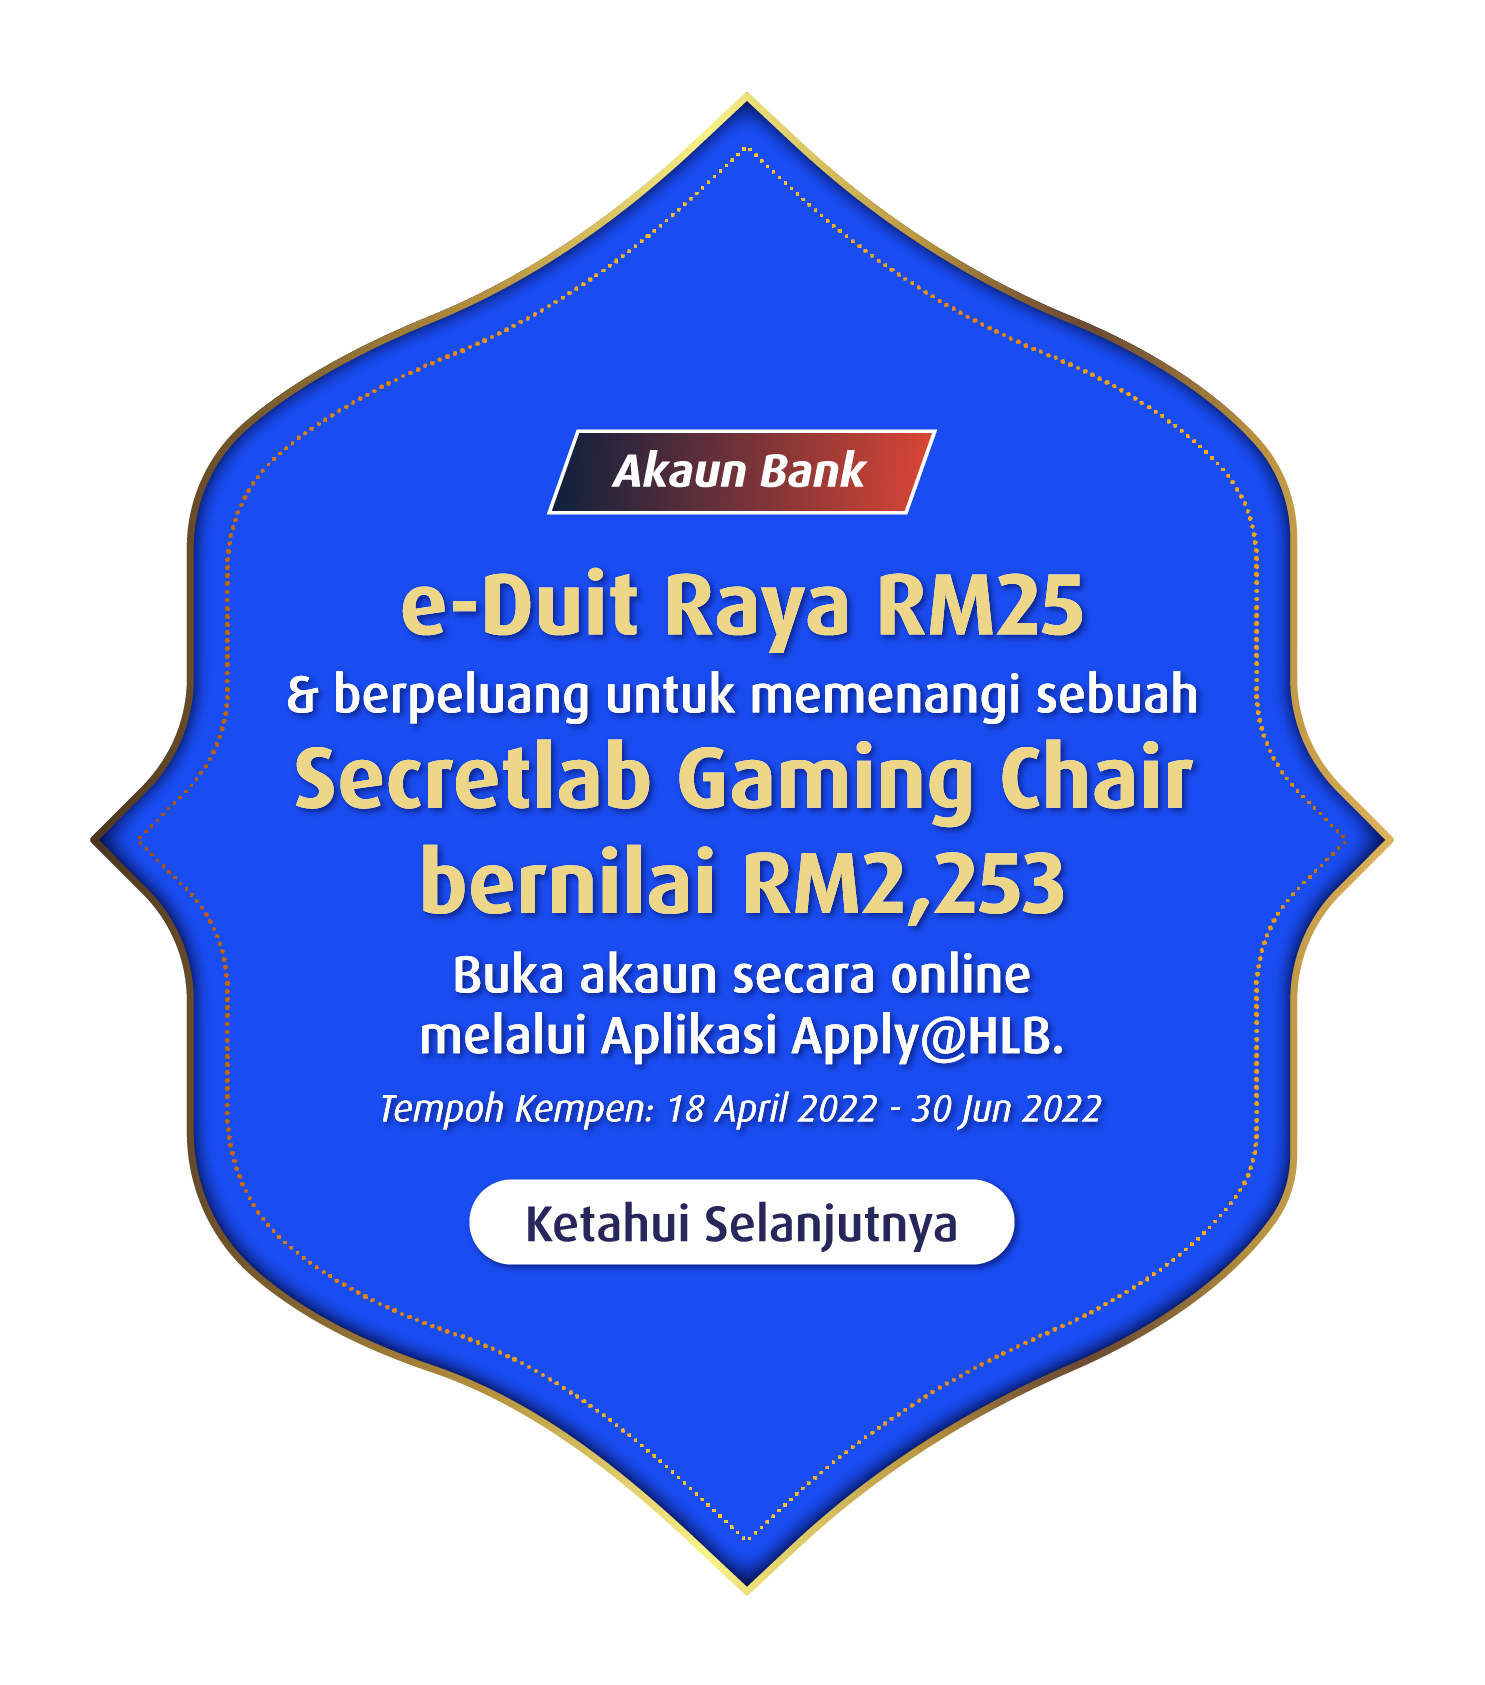 Bank Account: RM25 e-Duit Raya + gaming chair